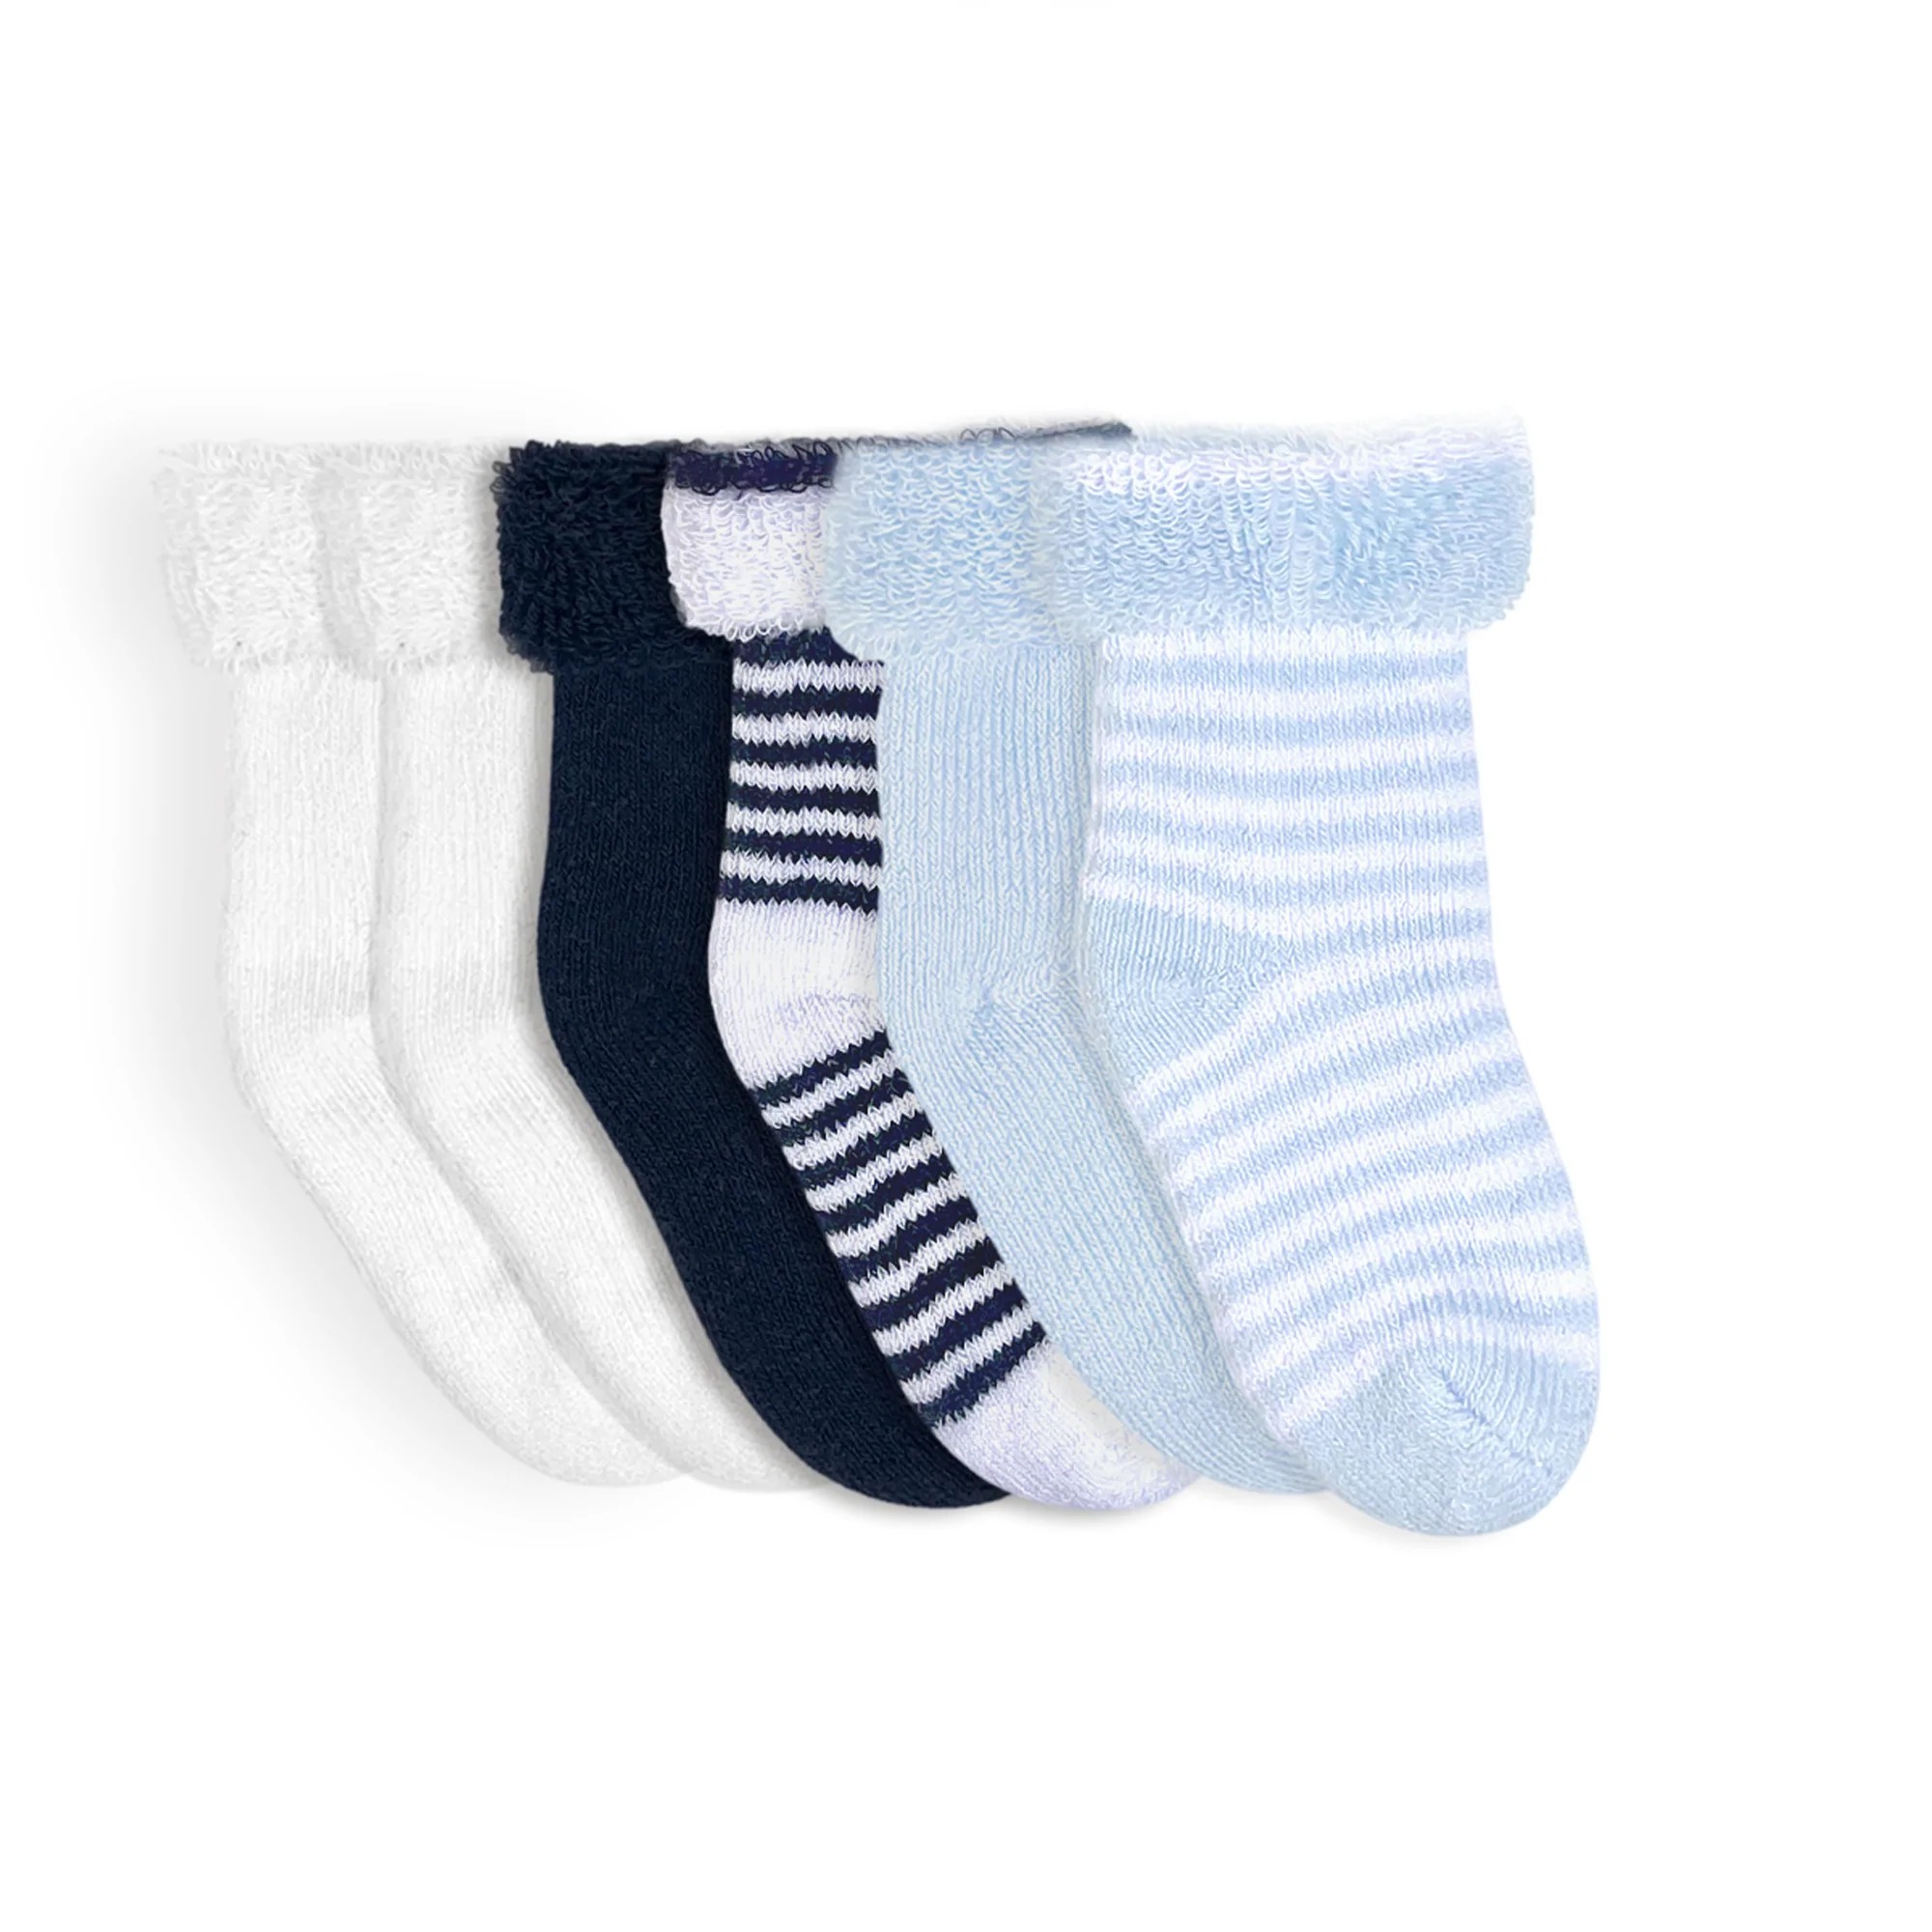 Kushies Terry Newborn Socks 6 Pack - Blue - 0-3 Months